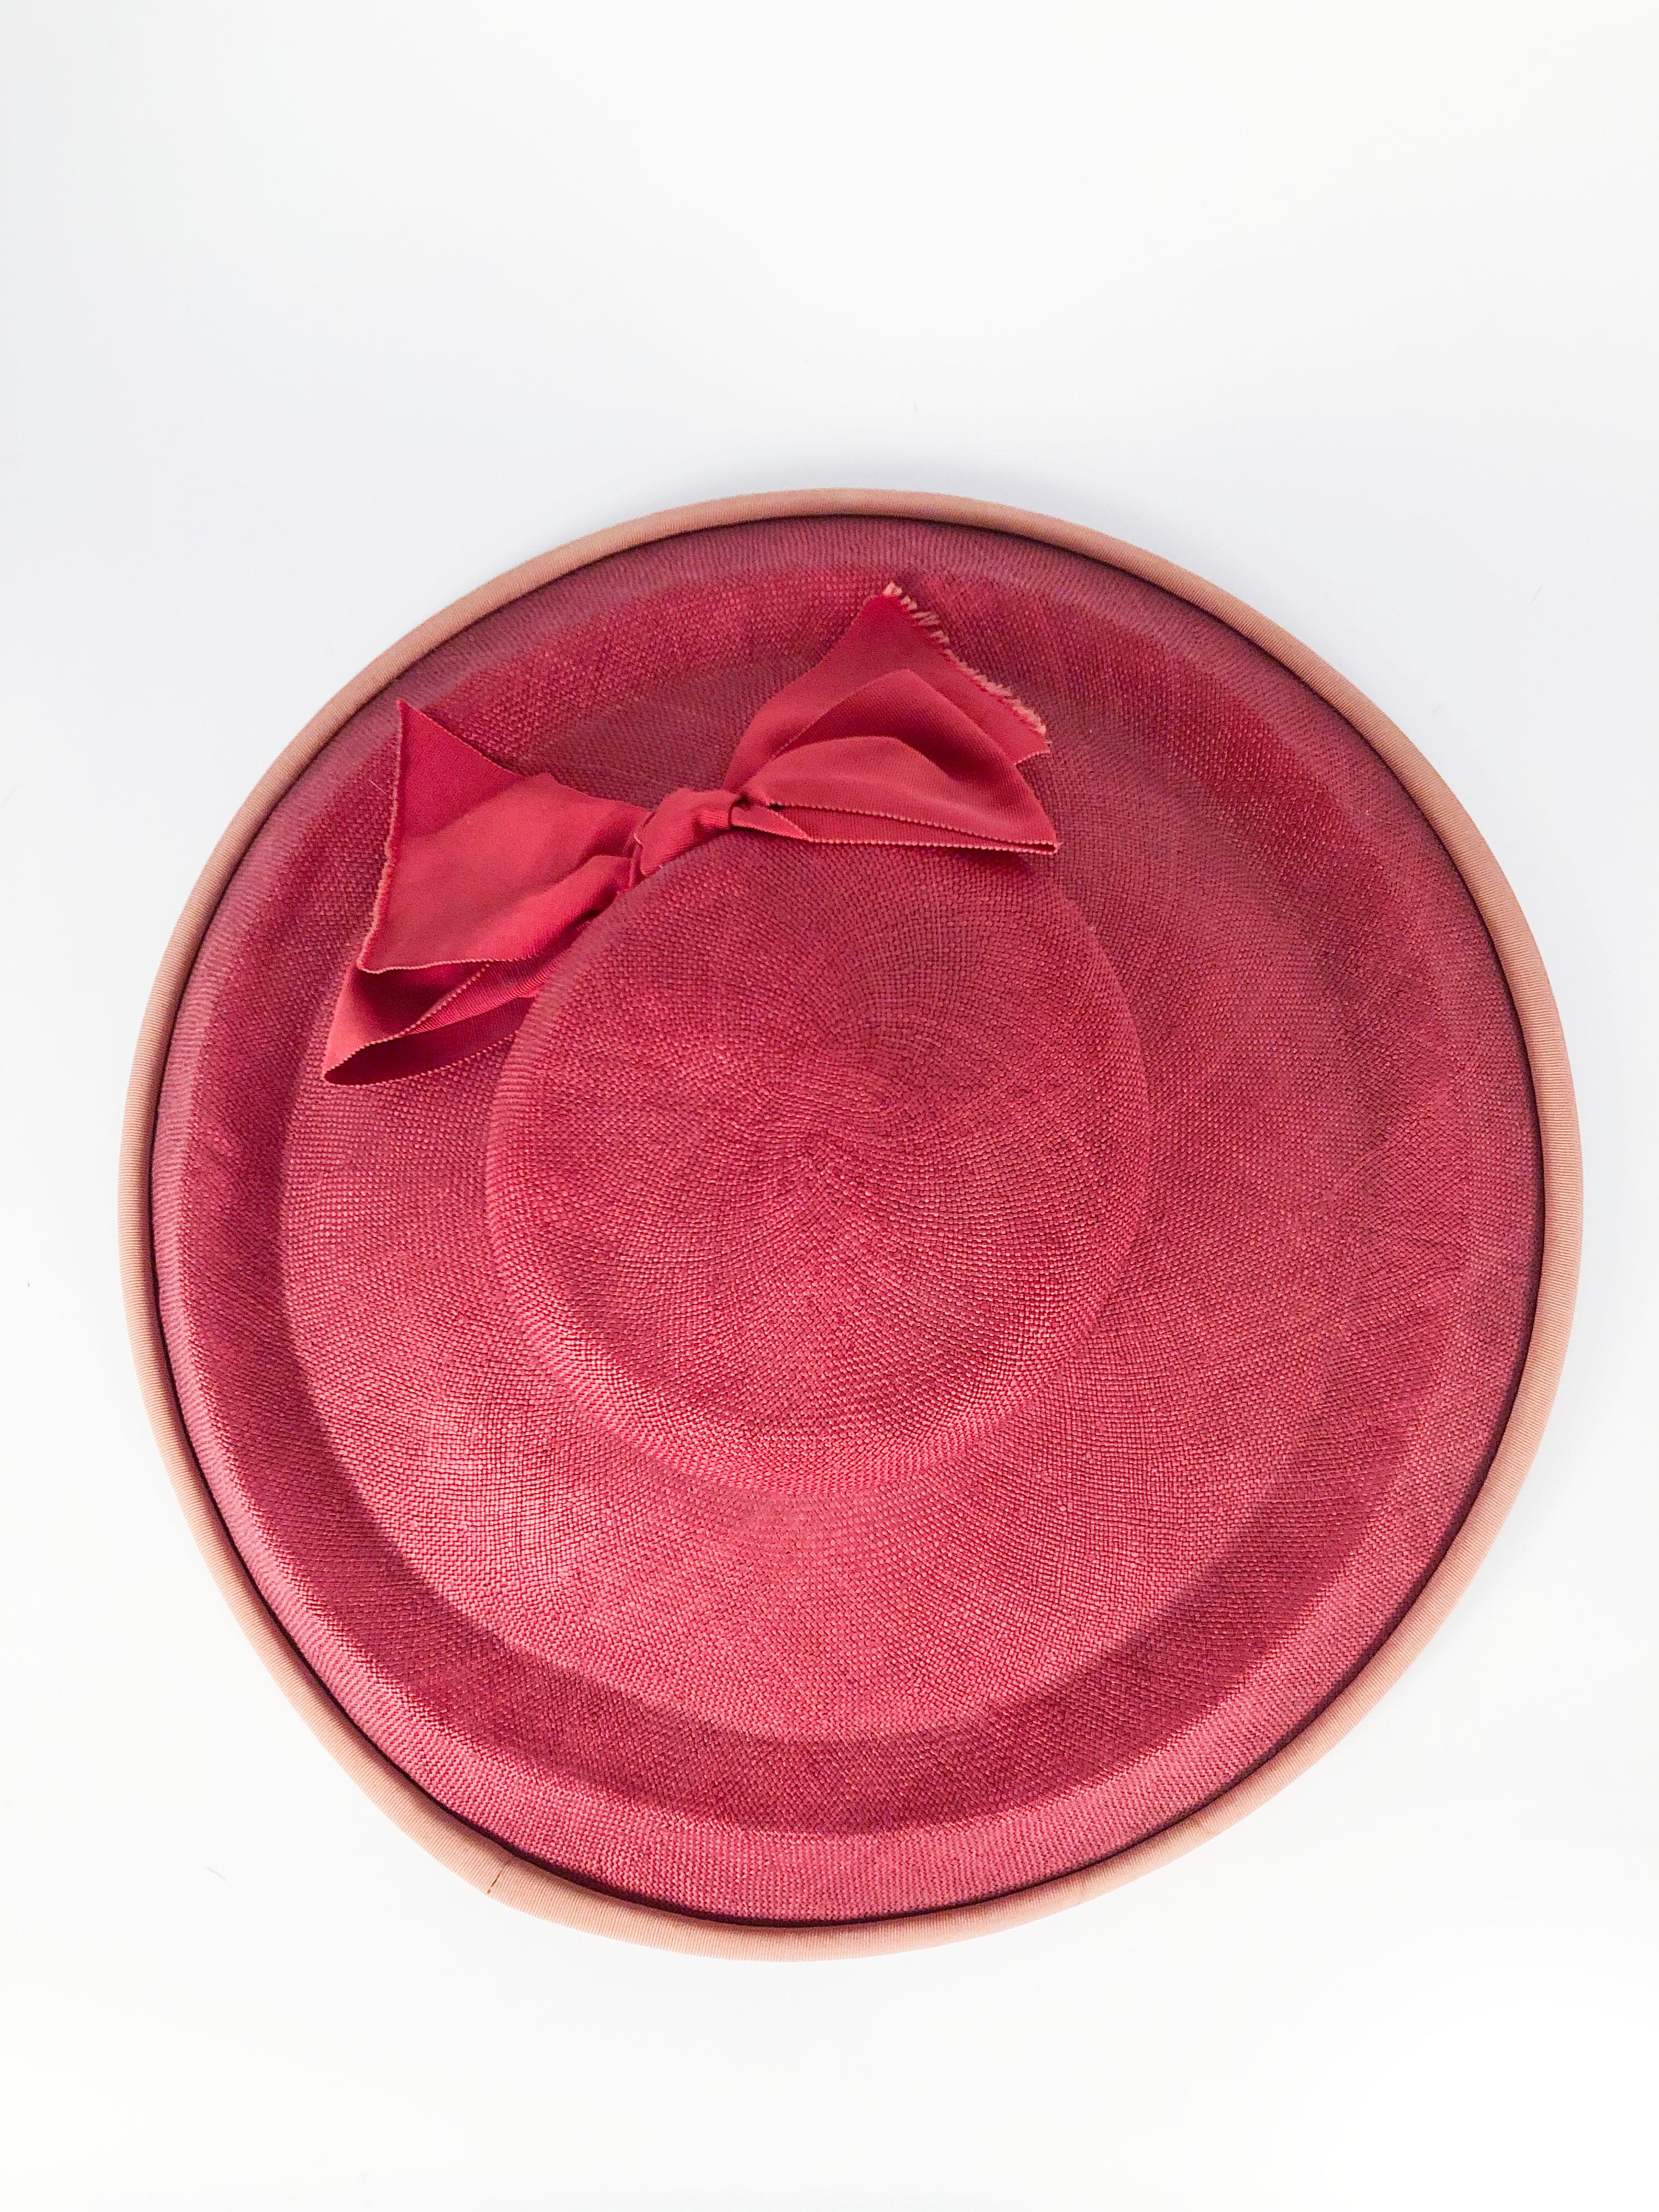 1940s womens hat